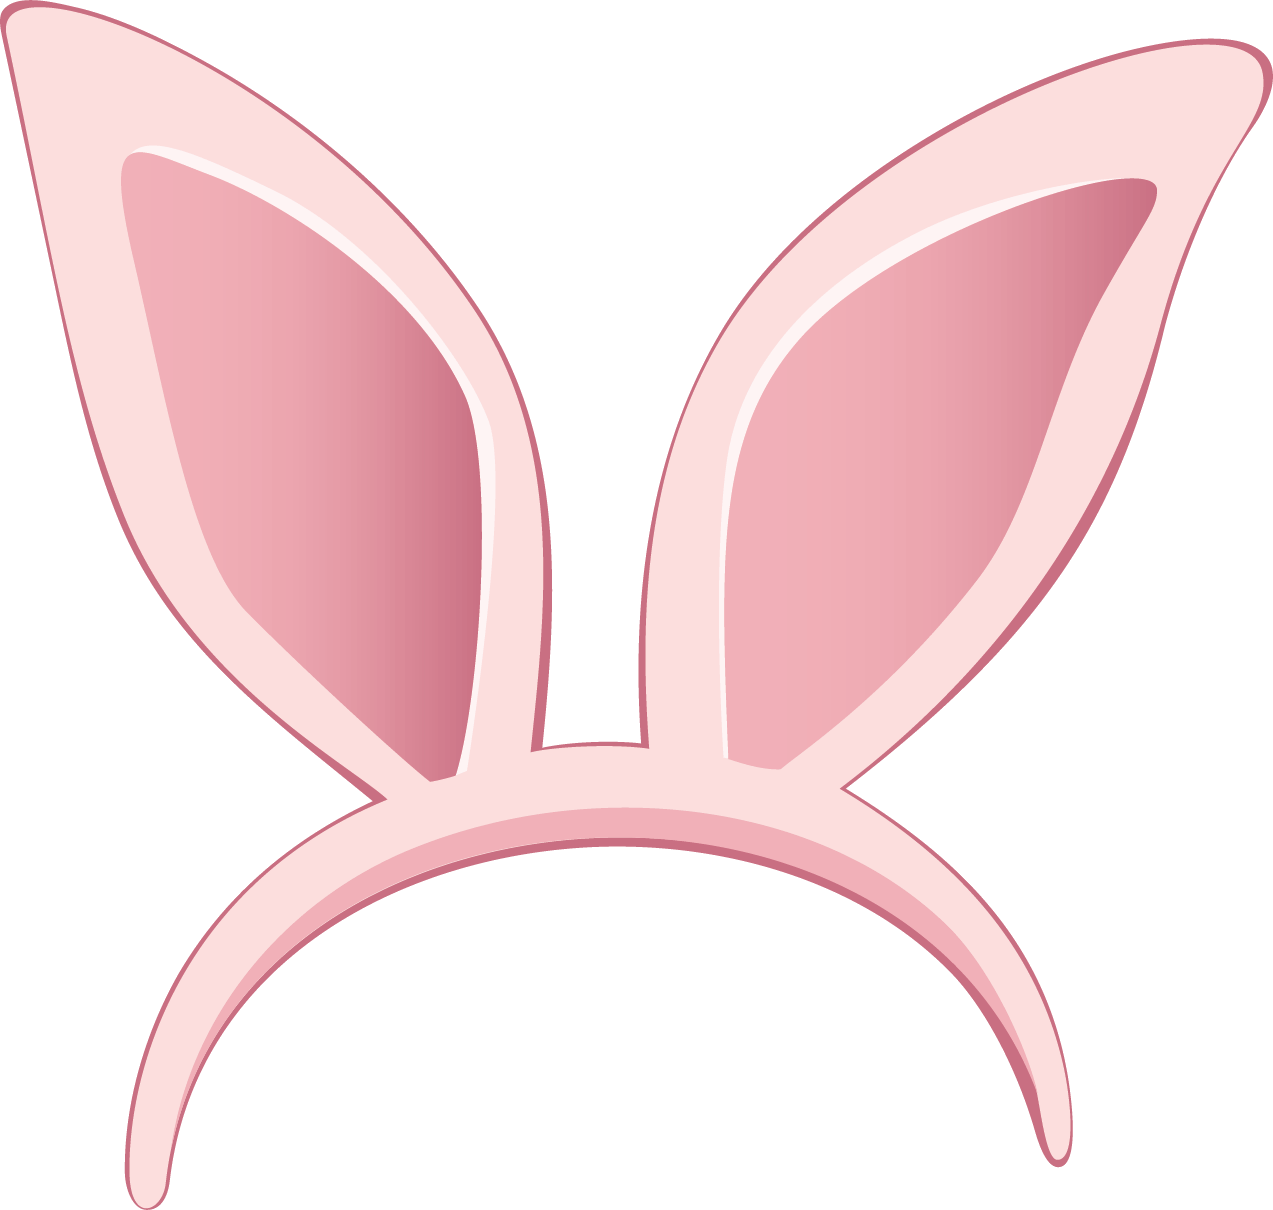 Pink Bunny Ears Headband PNG